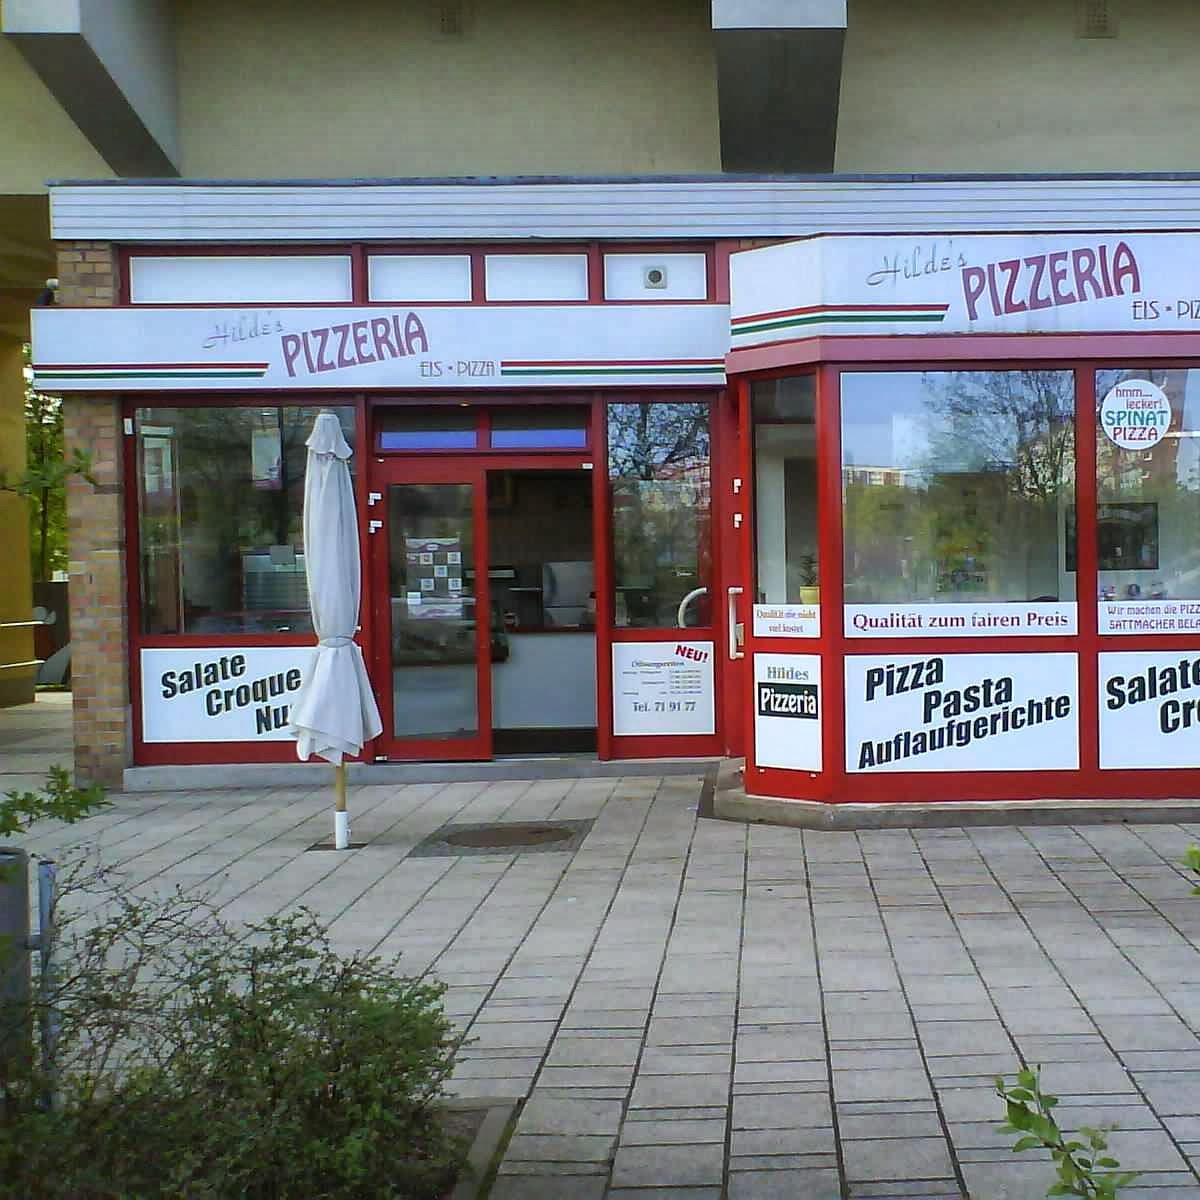 Restaurant "HILDES PIZZERIA" in  Rostock